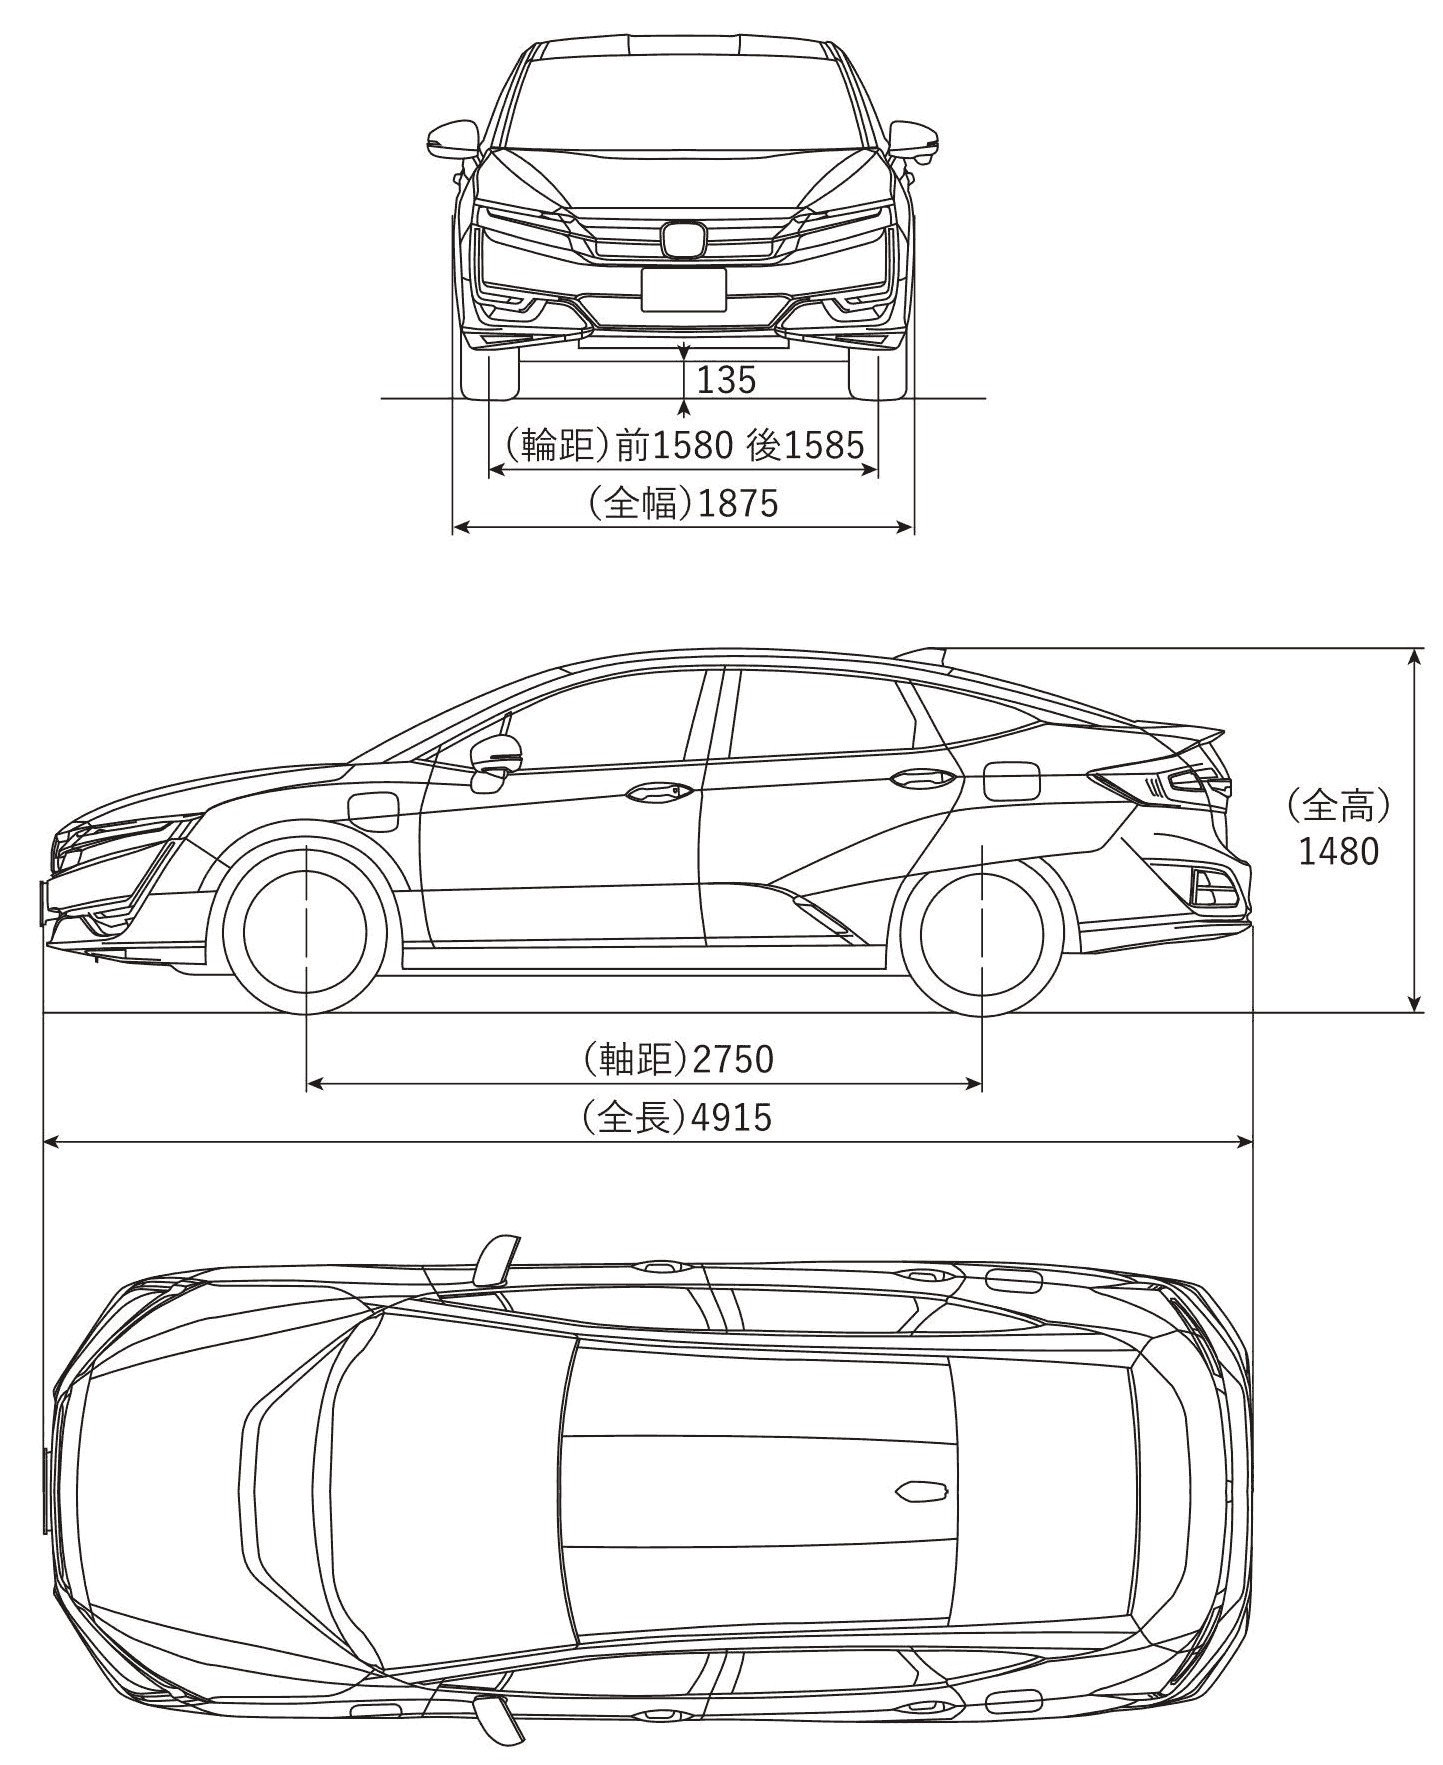 Honda Clarity blueprint